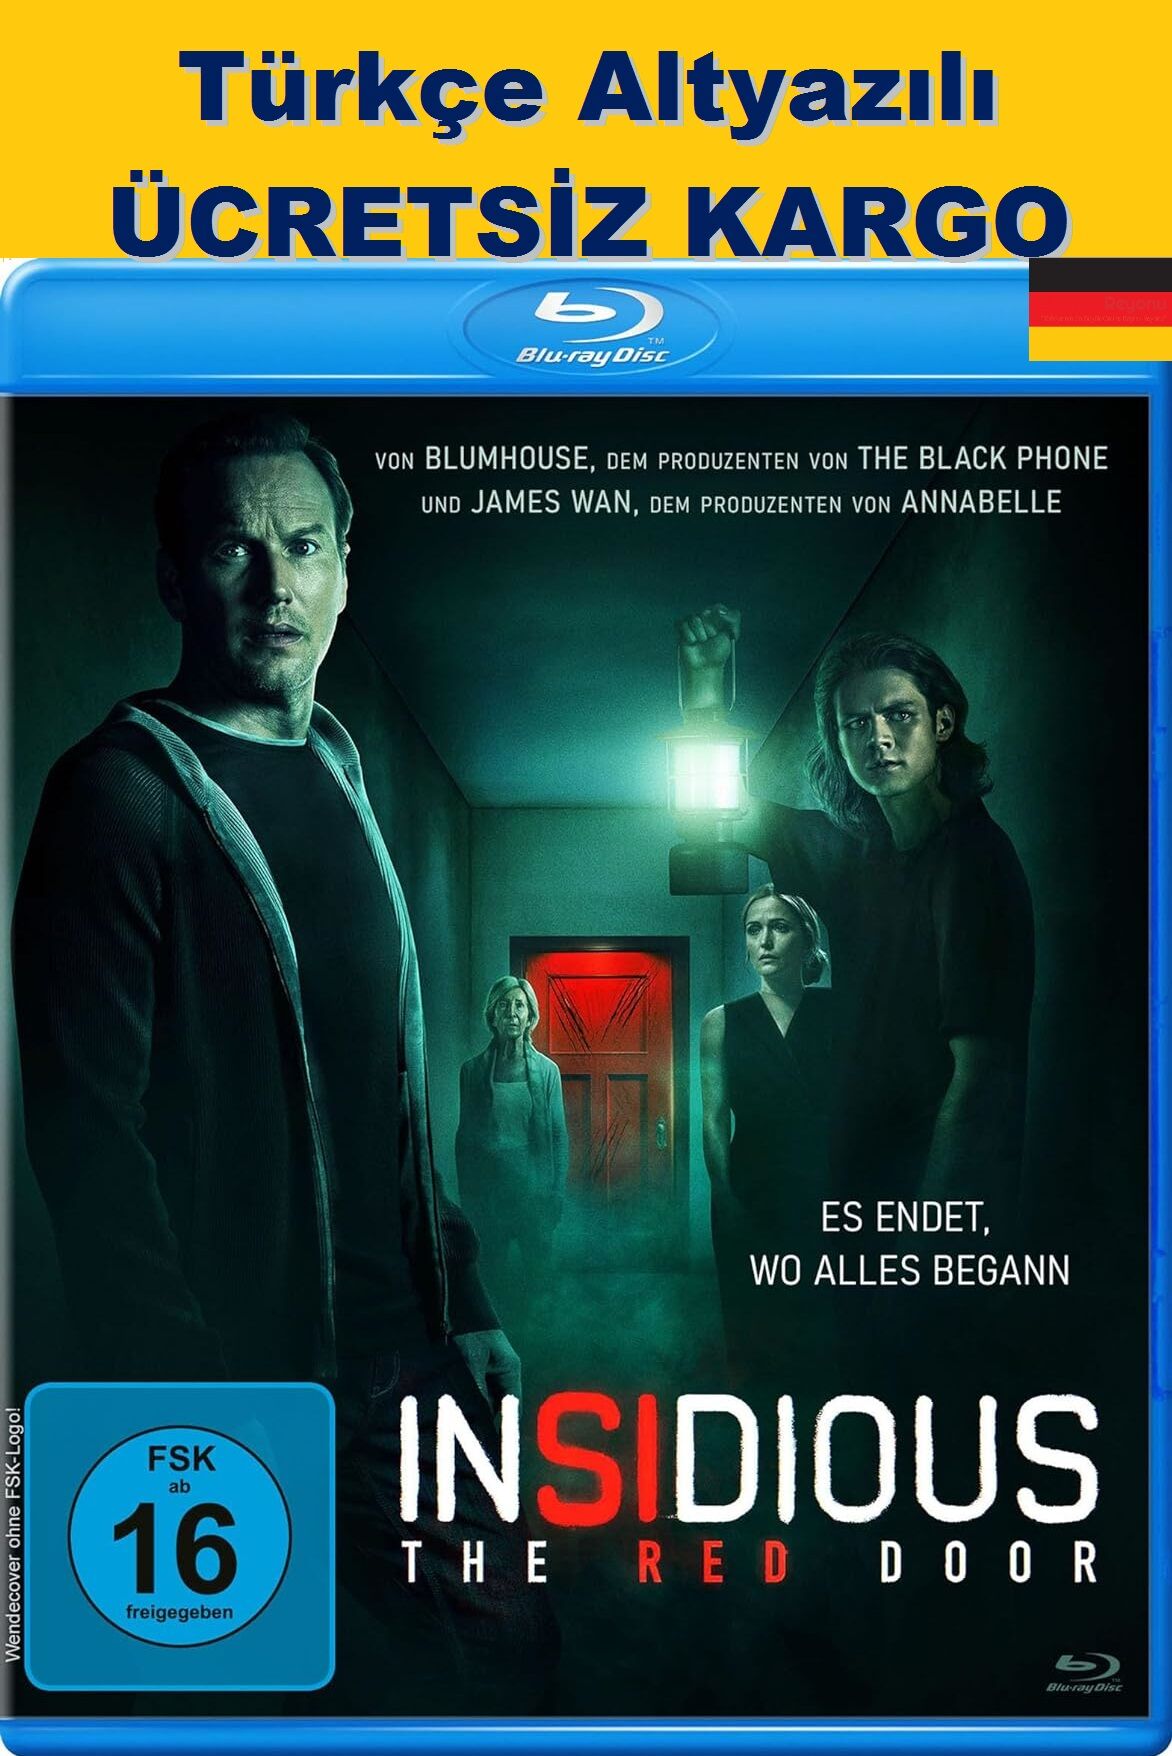 Insidious The Red Door - Ruhlar Bölgesi Kırmızı Kapı Blu-Ray